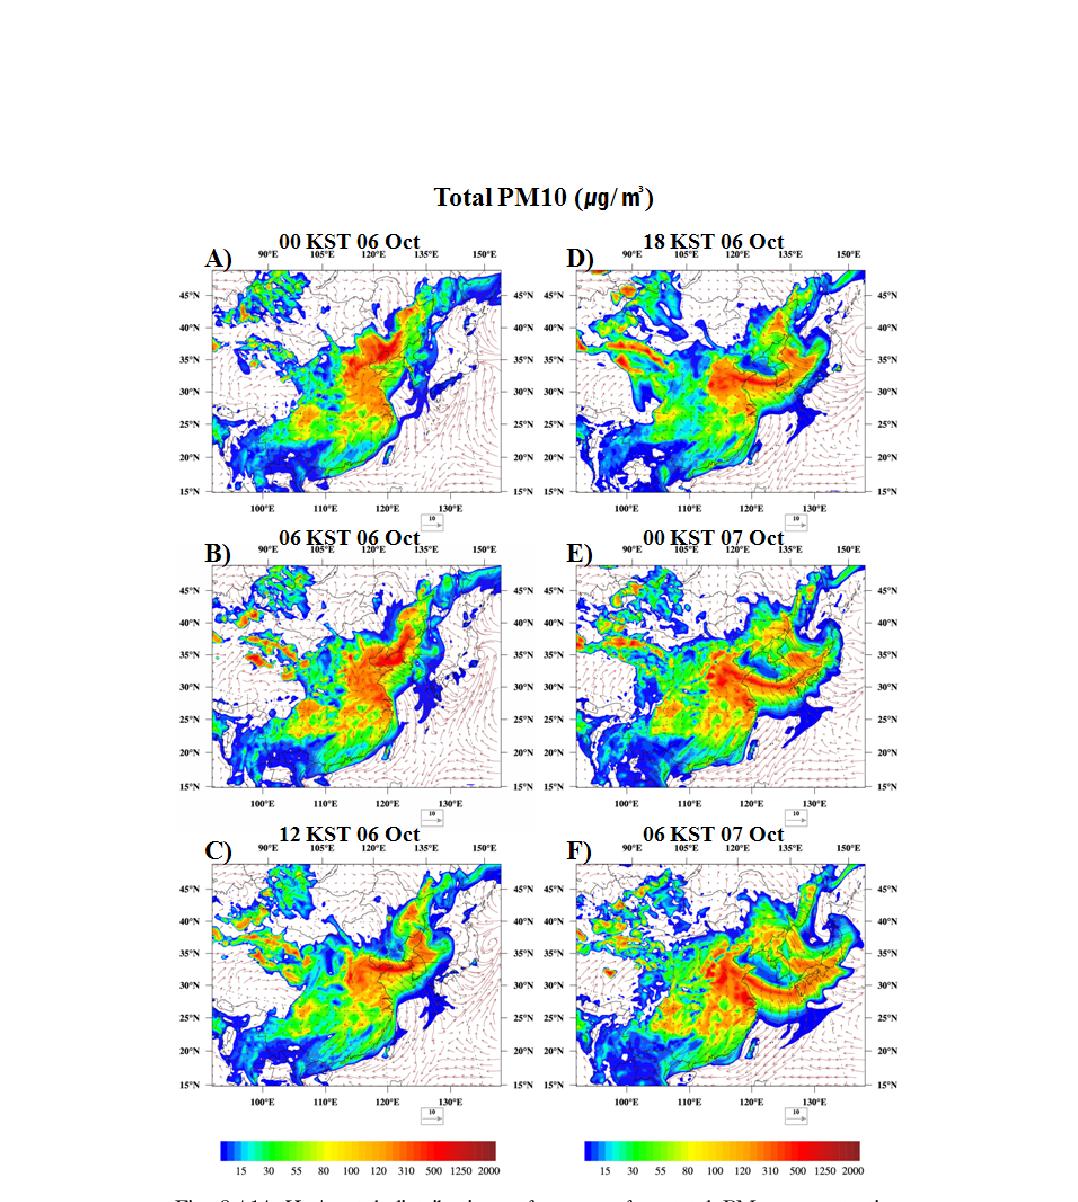 Horizontal distributions of near surface total PM10 concentration (µg m-3) using the FNL at (a) 0000 KST 06, (b) 0600 KST 06, (c) 12 KST 06, (d) 18 KST 06, (e) 00 KST 07, (f) 06 KST 07 October 2011.